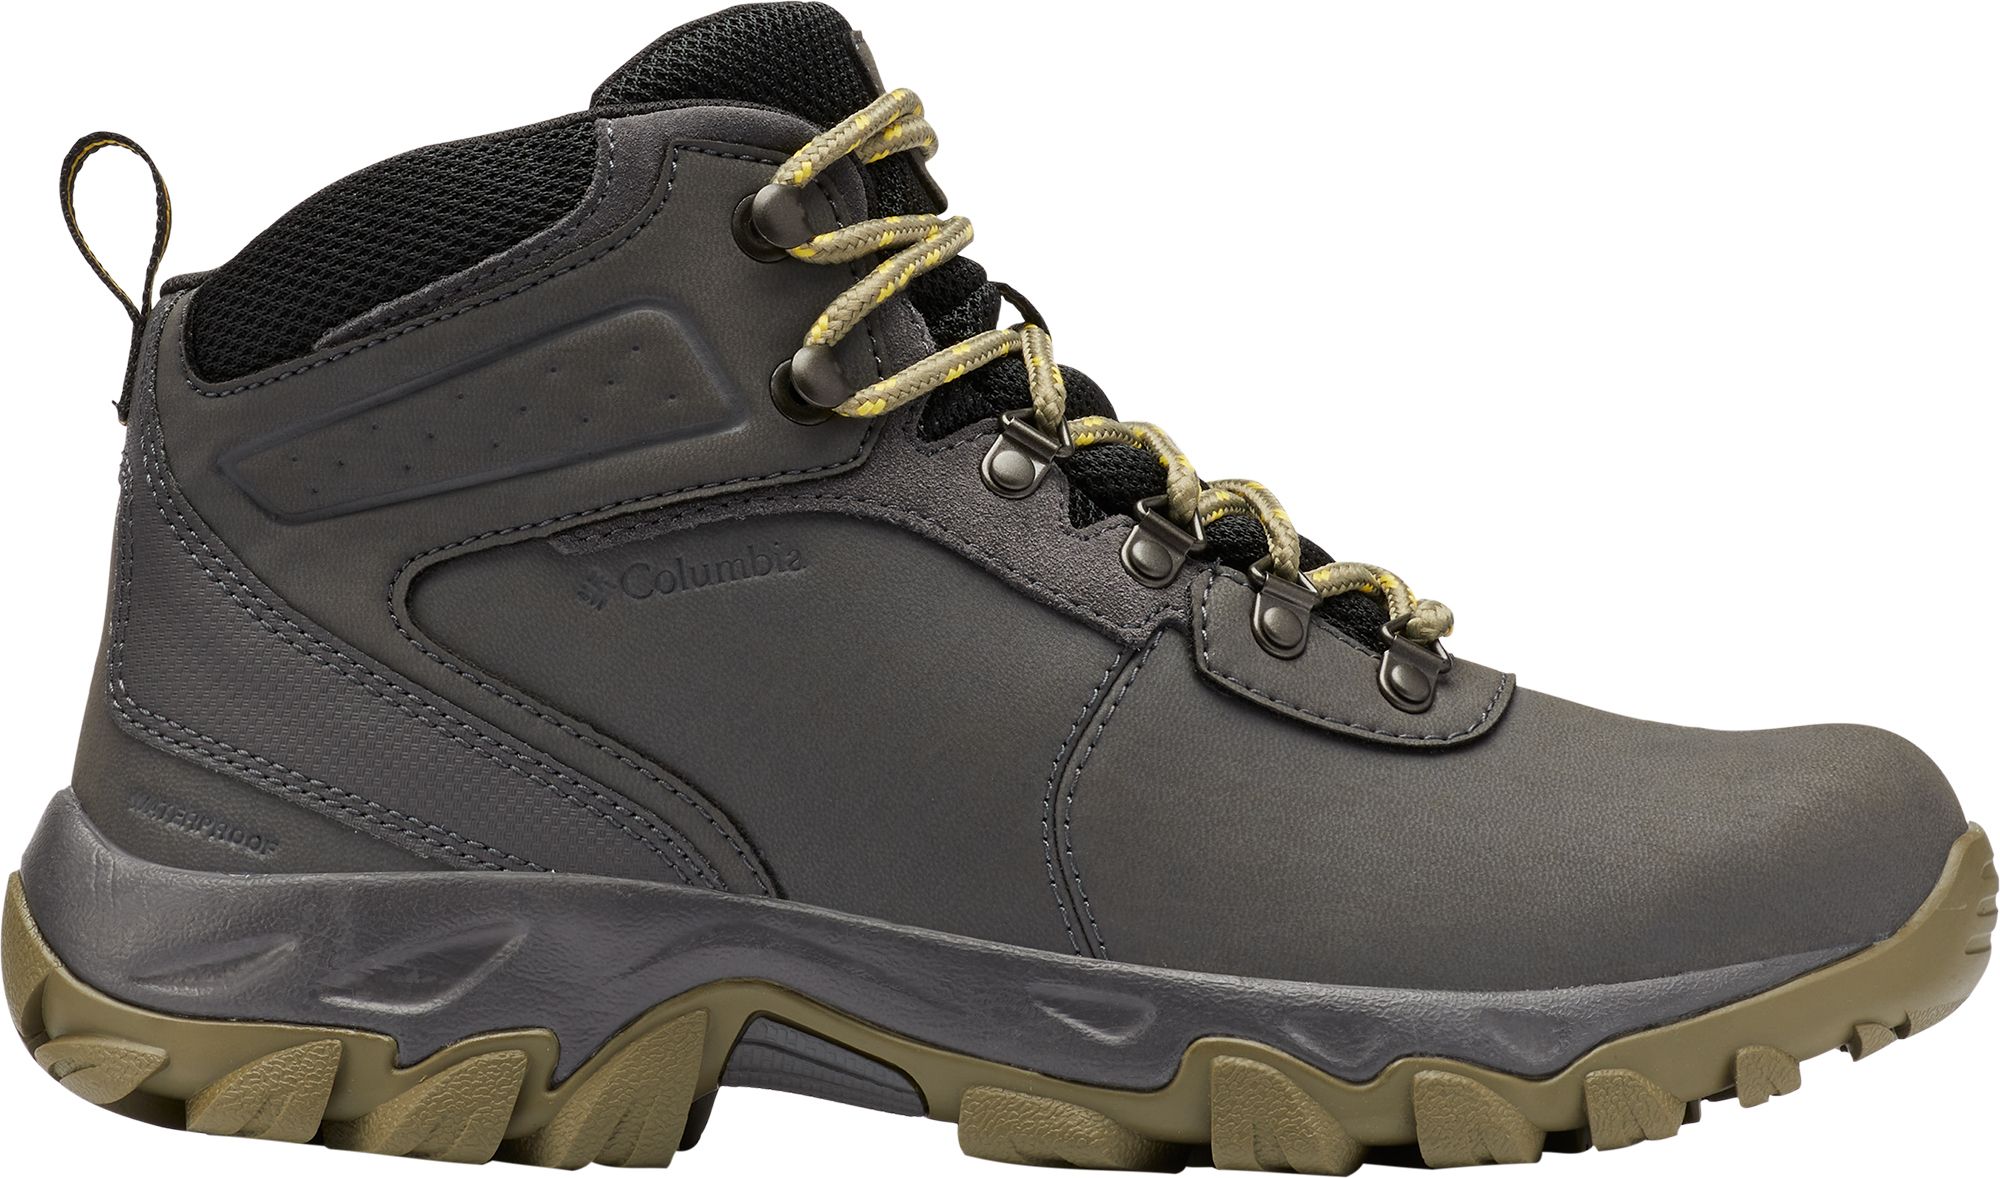 Photos - Trekking Shoes Columbia Men's Newton Ridge Plus II Waterproof Hiking Boots, Size 13, Dark 